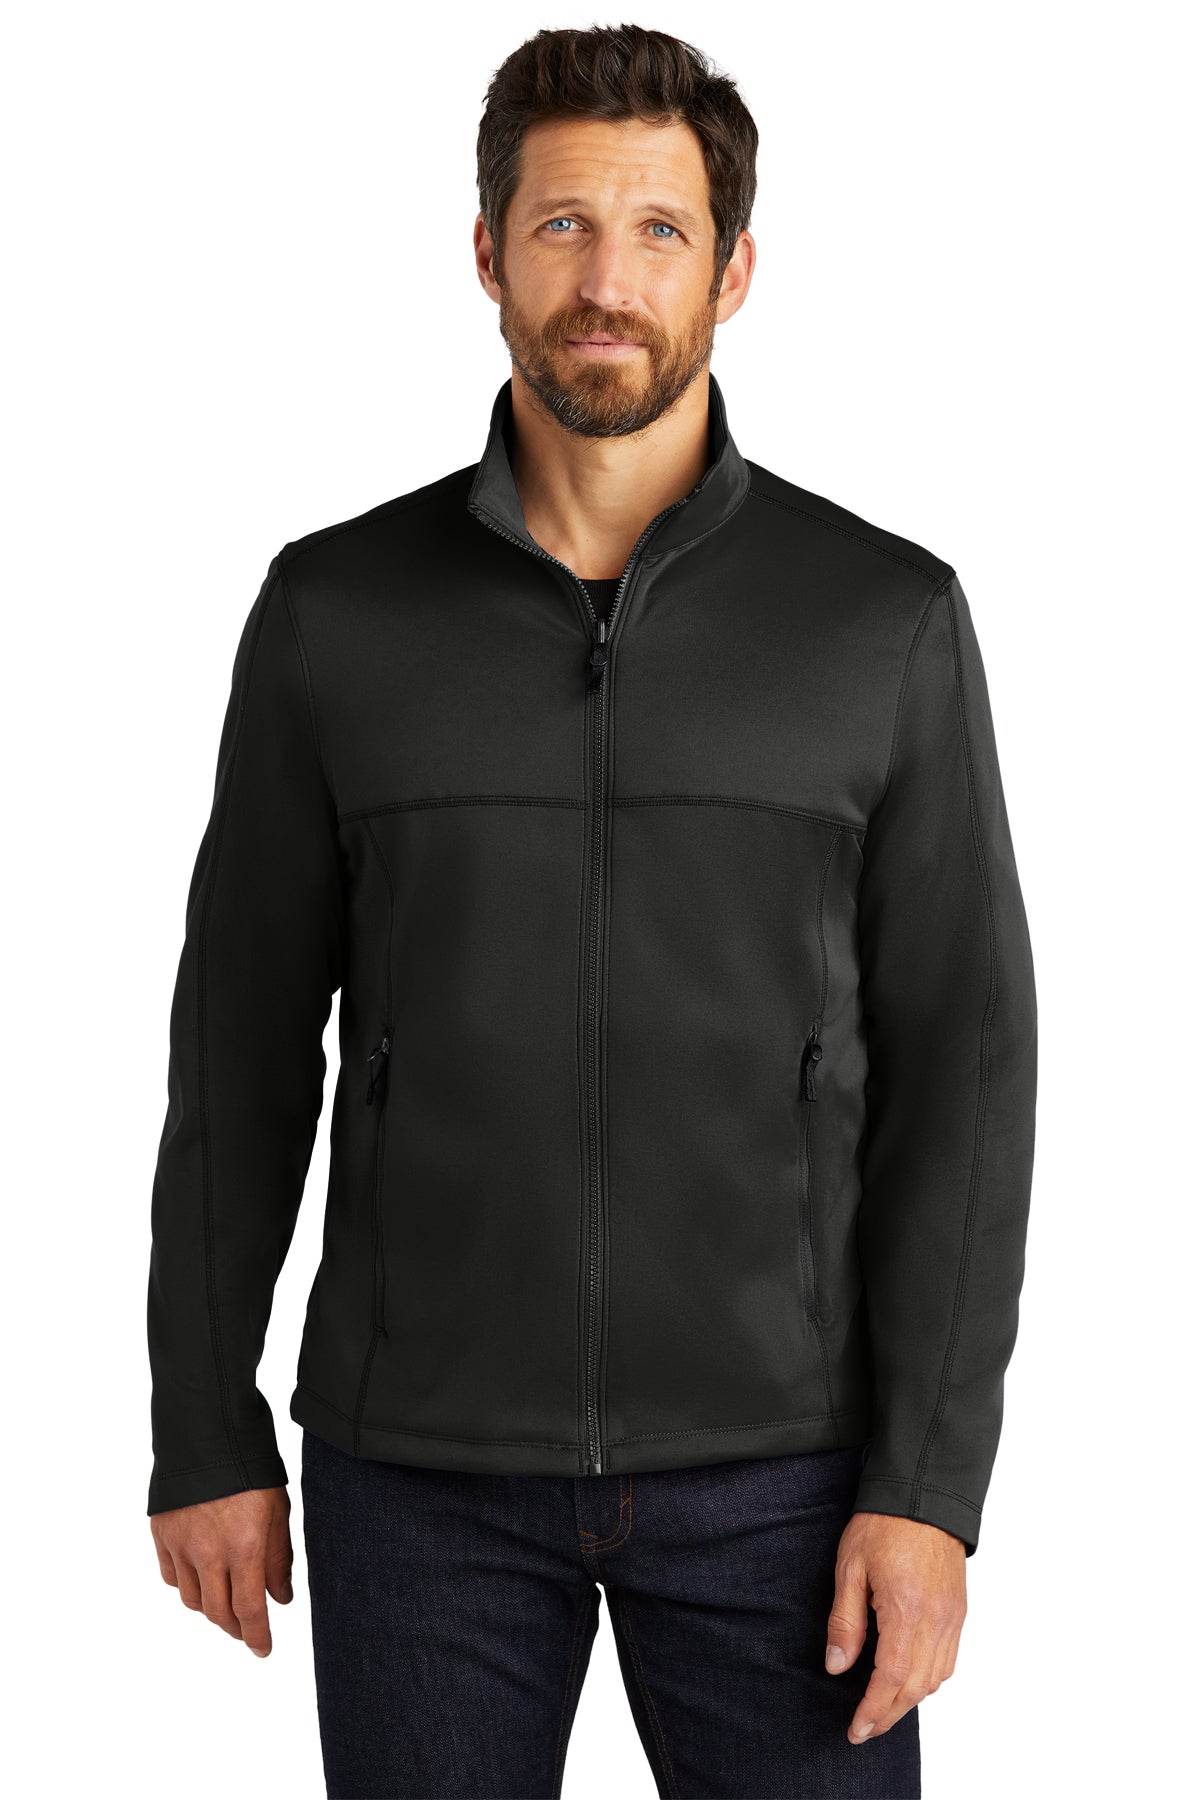 MEDSTAR F904 Port Authority ® Collective Smooth Fleece Jacket